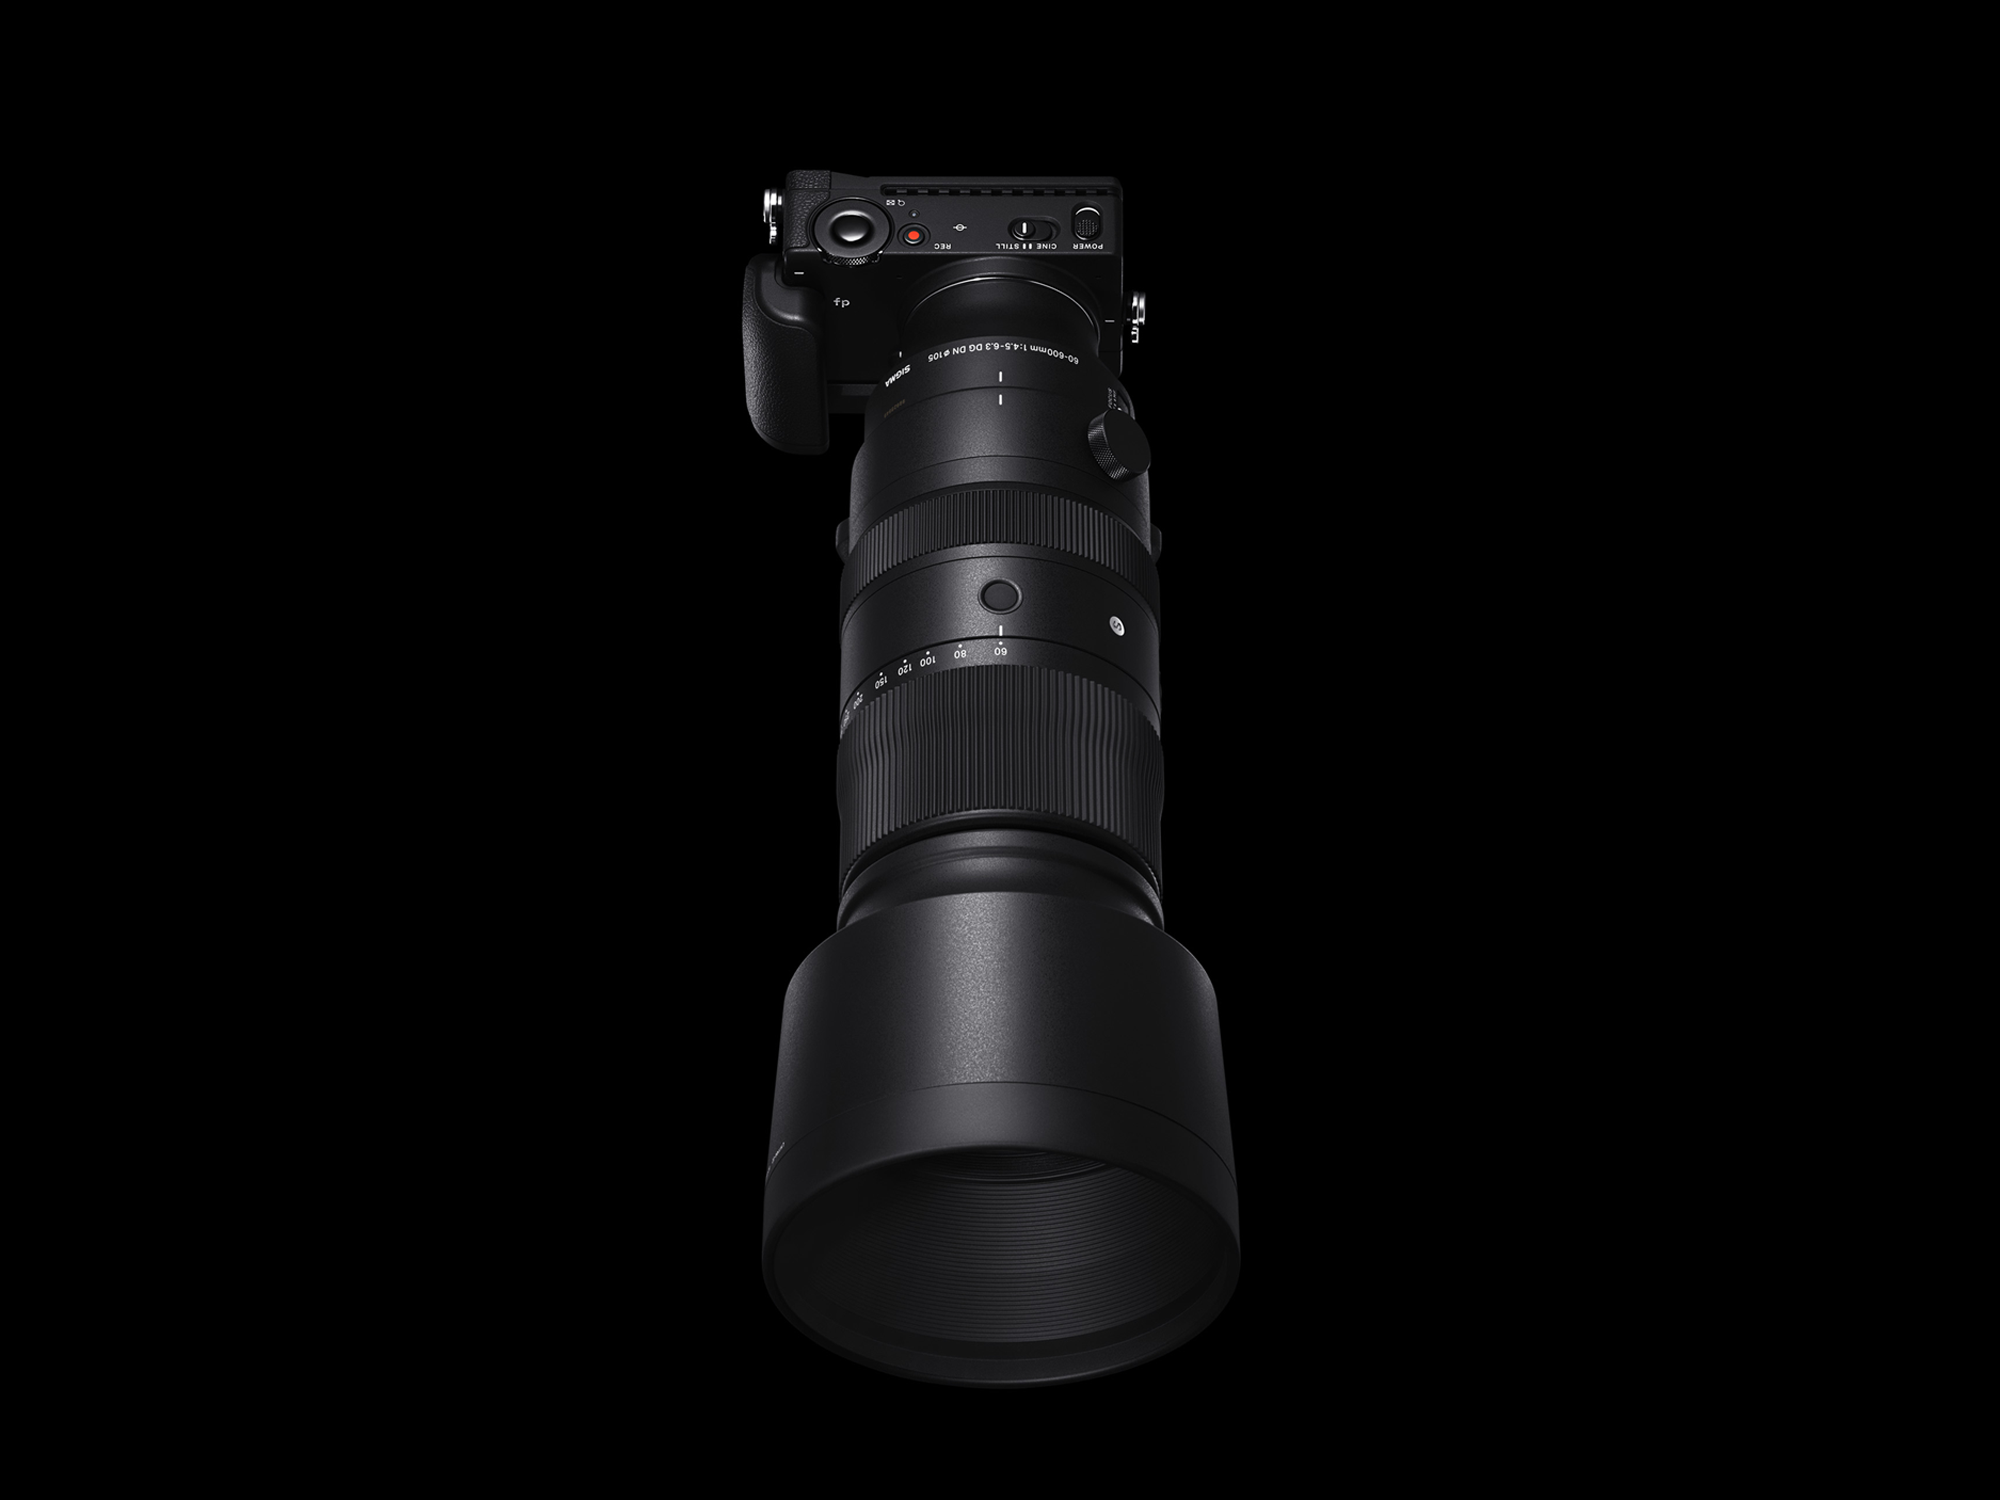 Clearance Sigma 60-600mm F4.5-6.3 DG DN OS I Sports Lens - Sony E